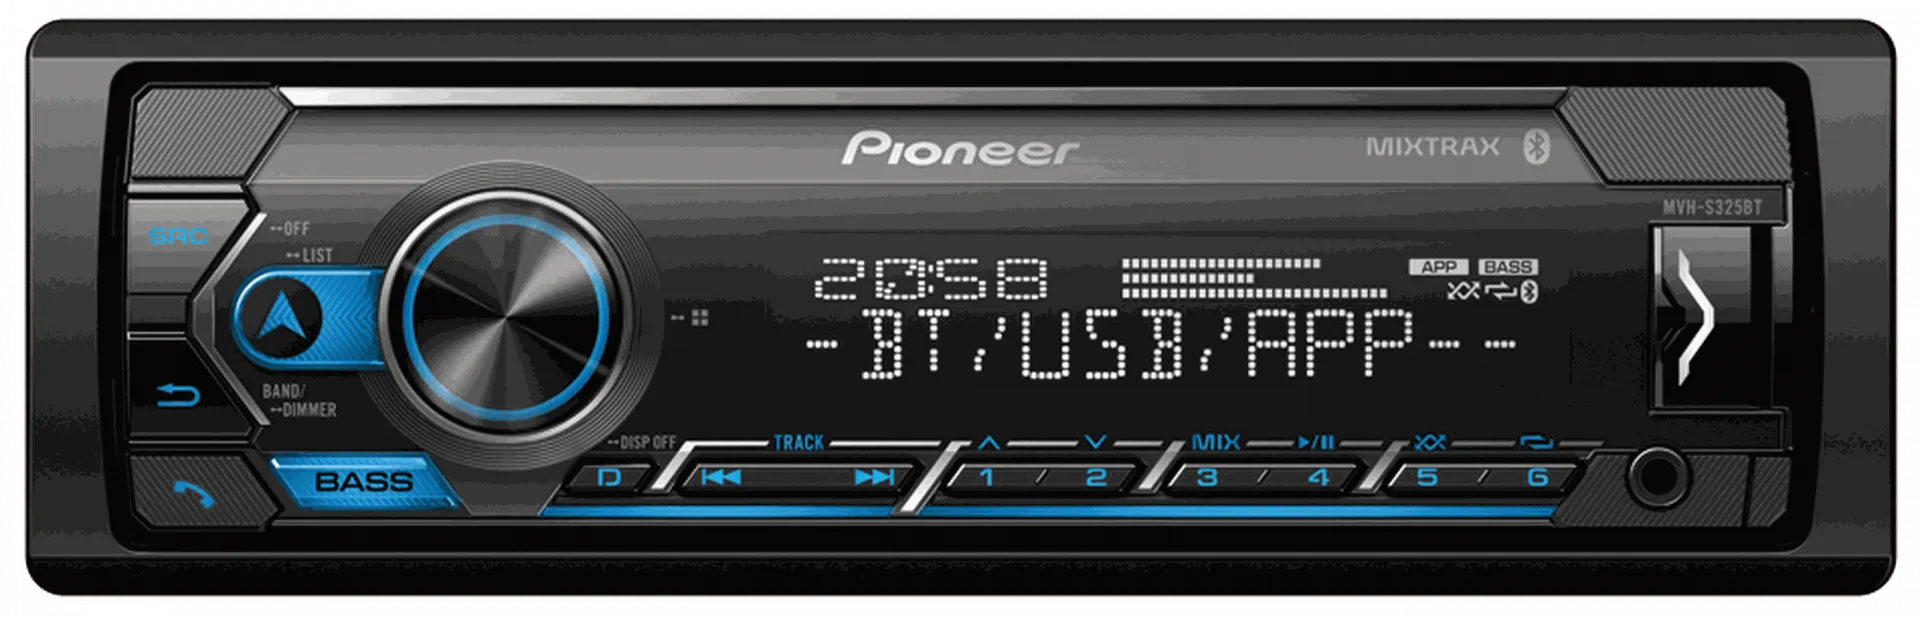 Автомагнитола Pioneer MVH-S325BT с технологией BLUETOOTH®#1